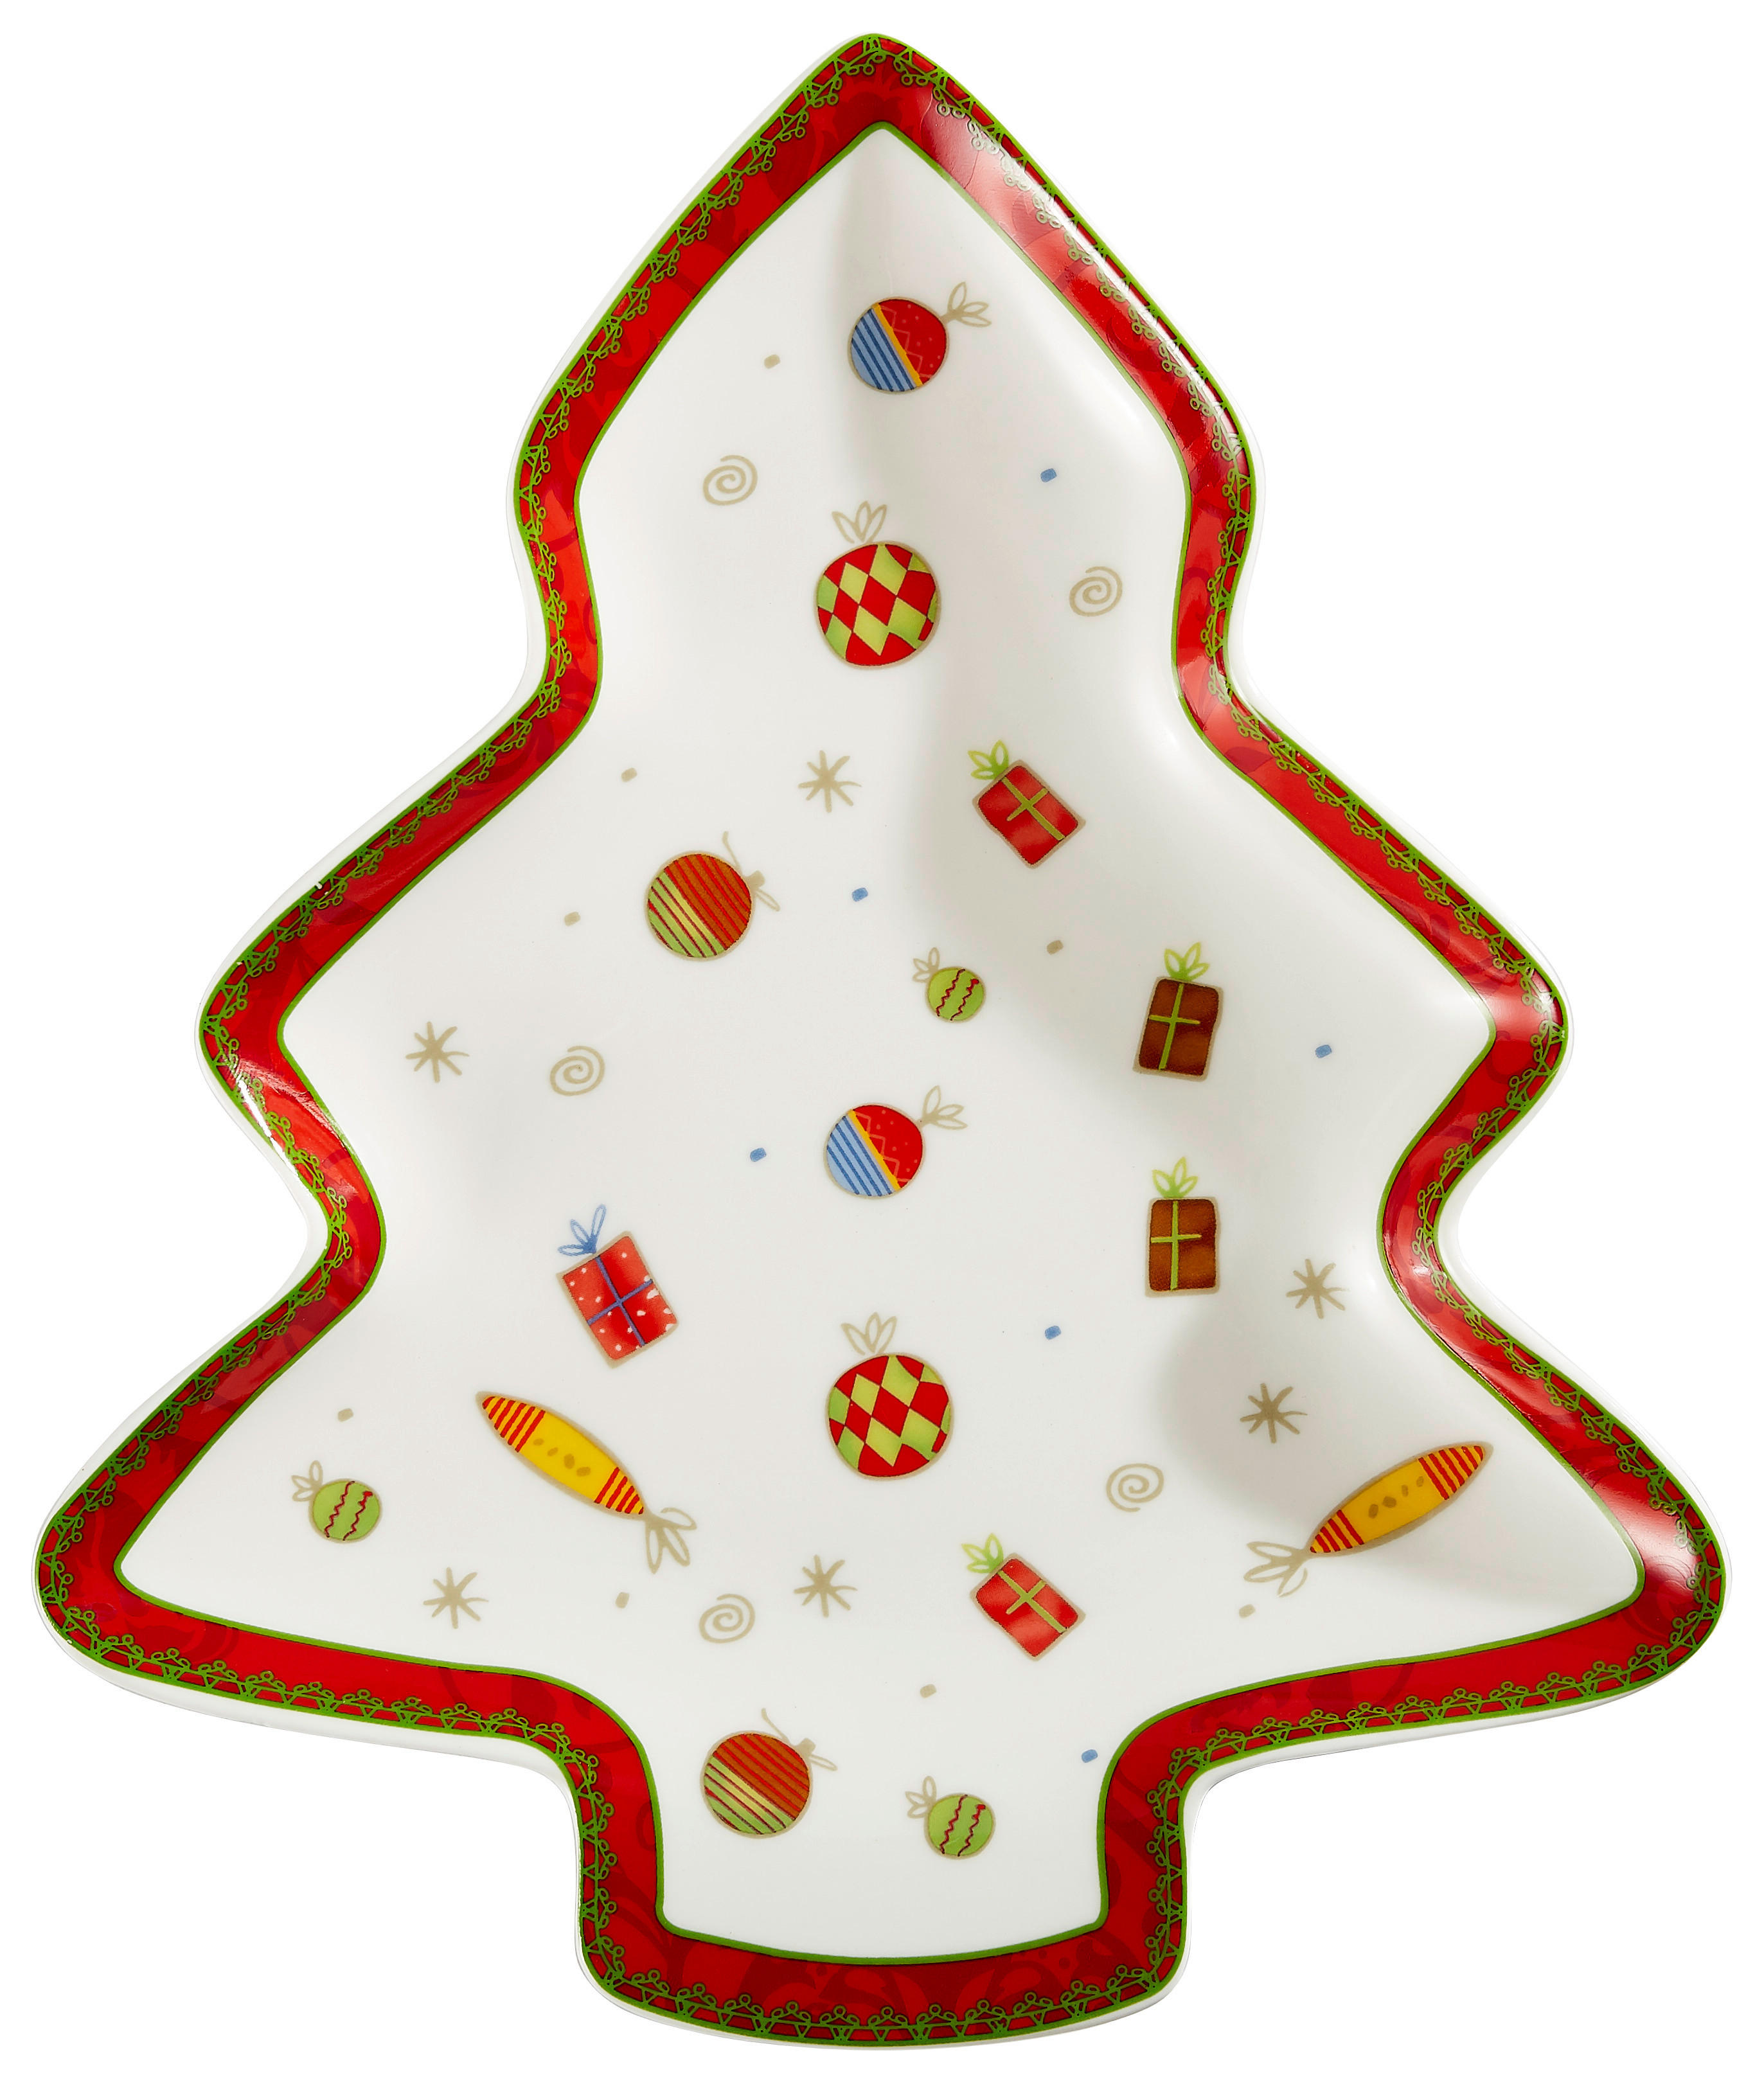 PLADEN TREE PLATE CHRISTMAS - večbarvno, Basics, keramika (22,86cm) - X-Mas